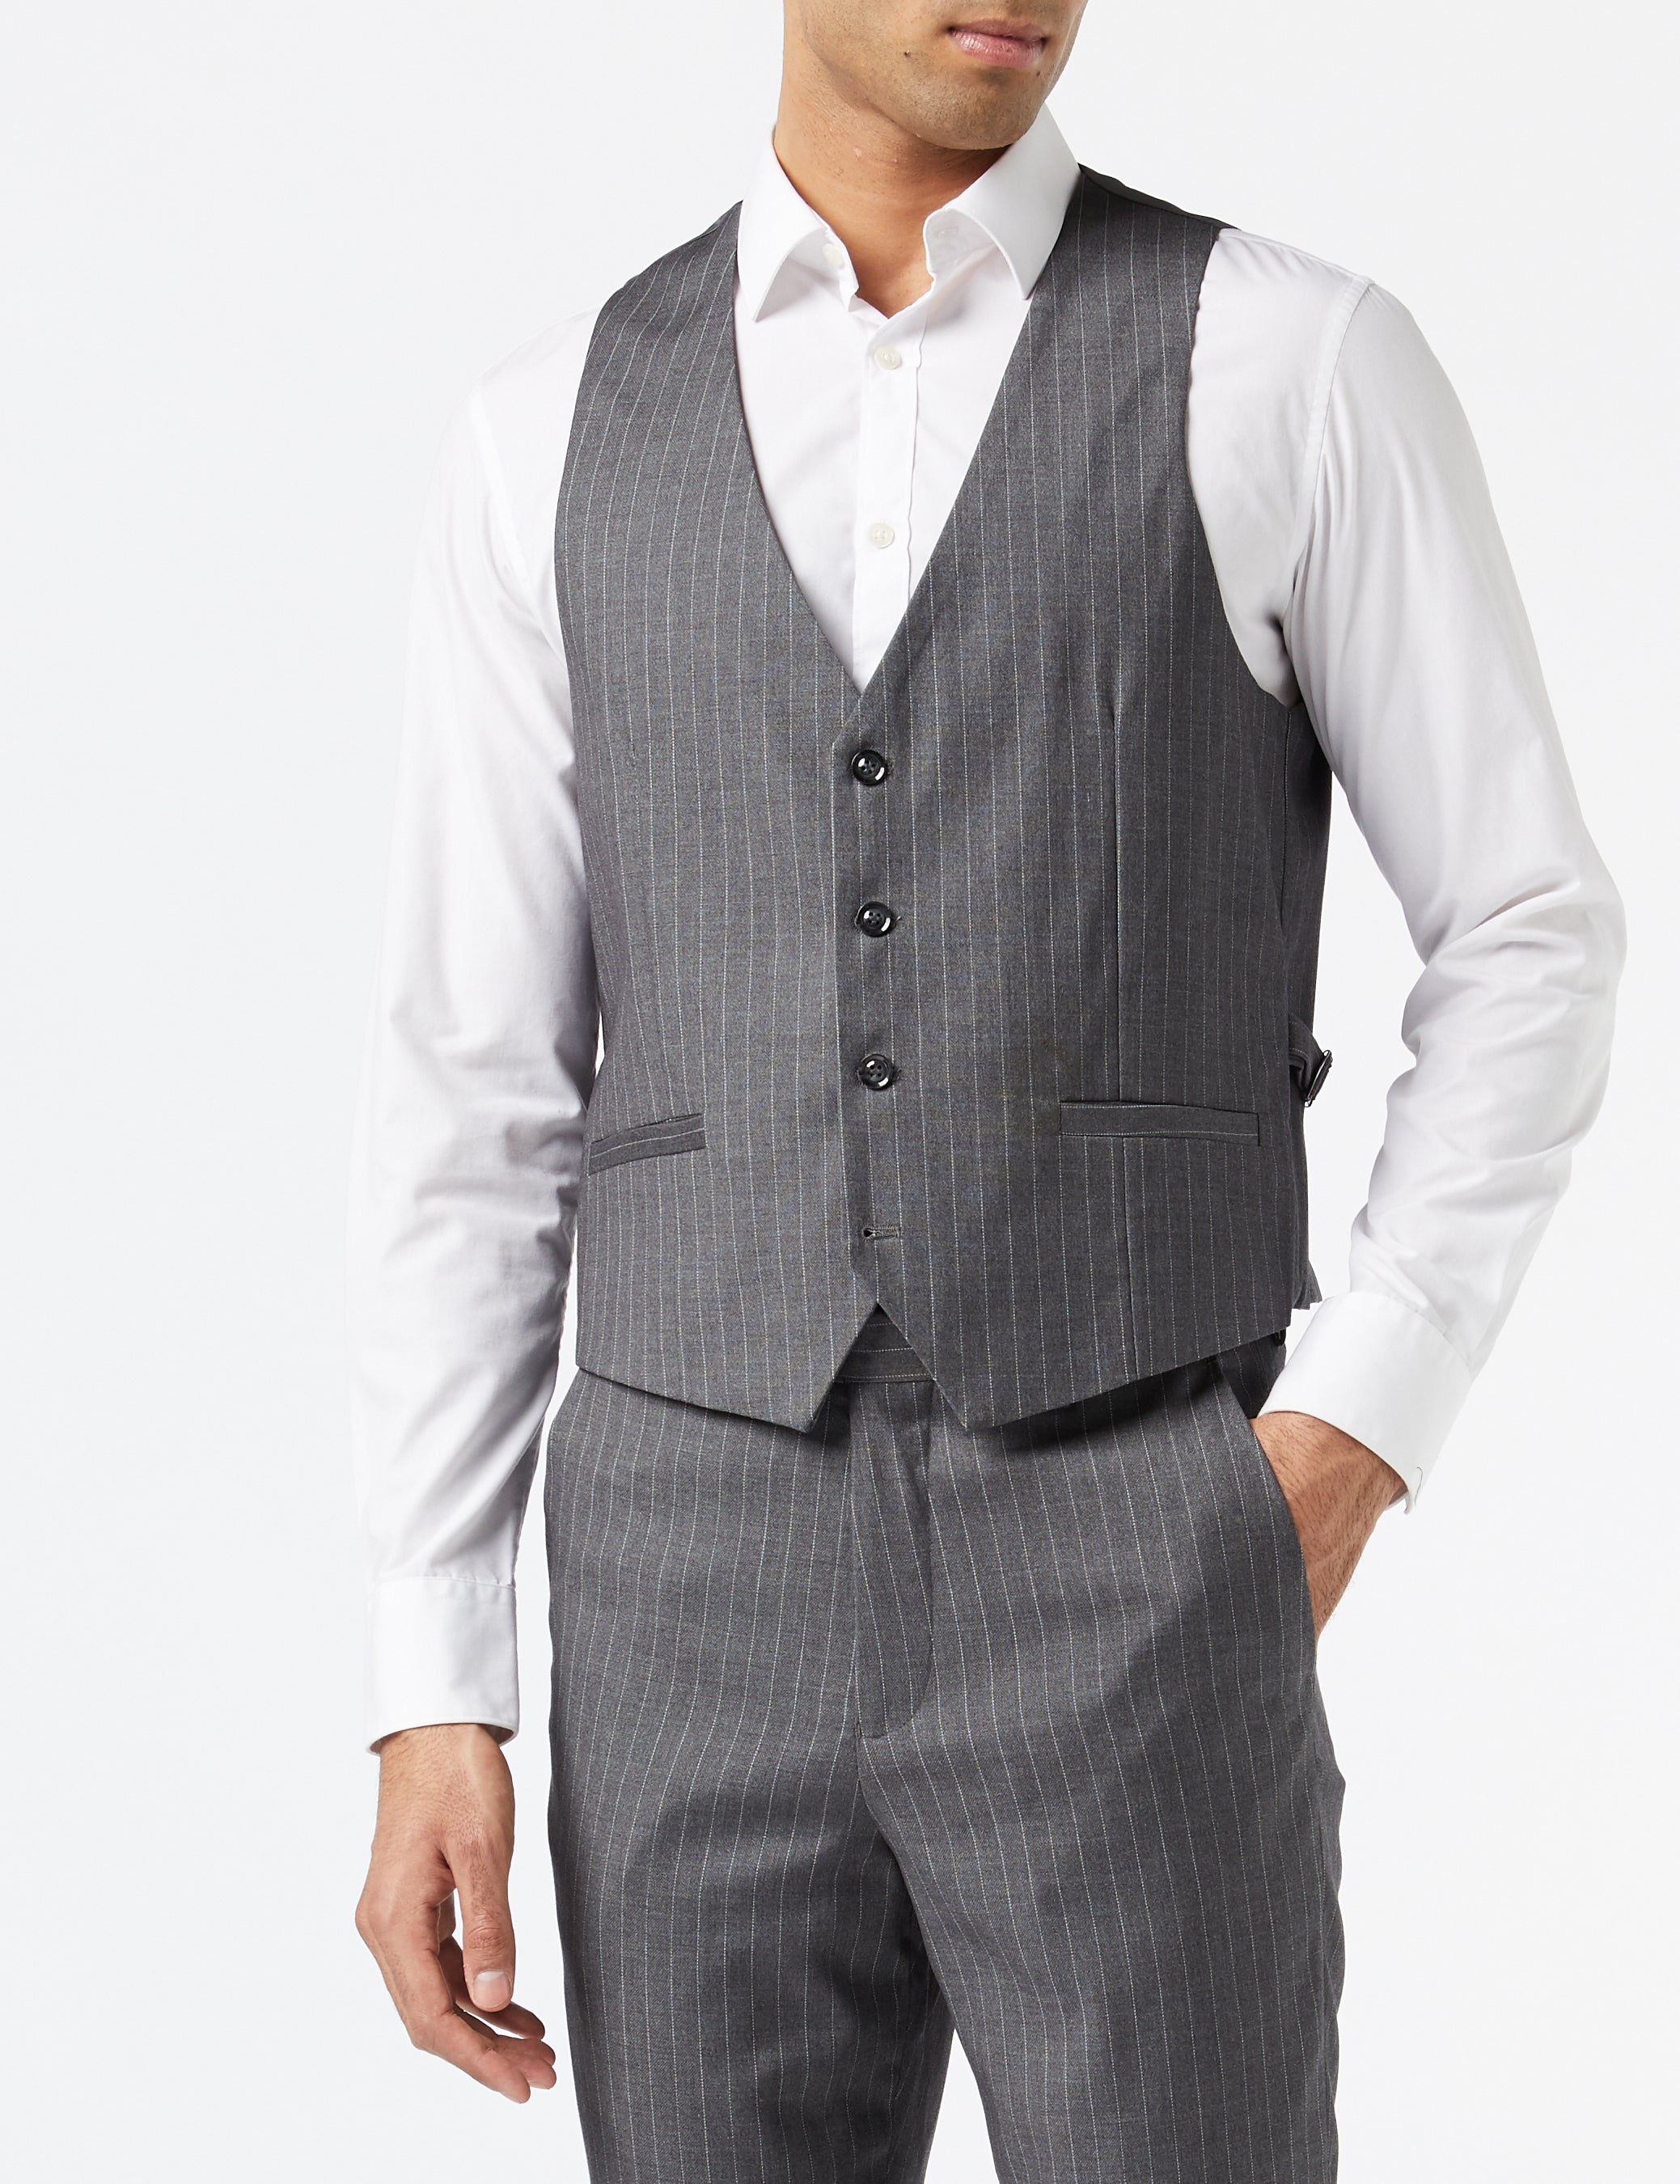 7 Piece Pin Stripe Grey Suit